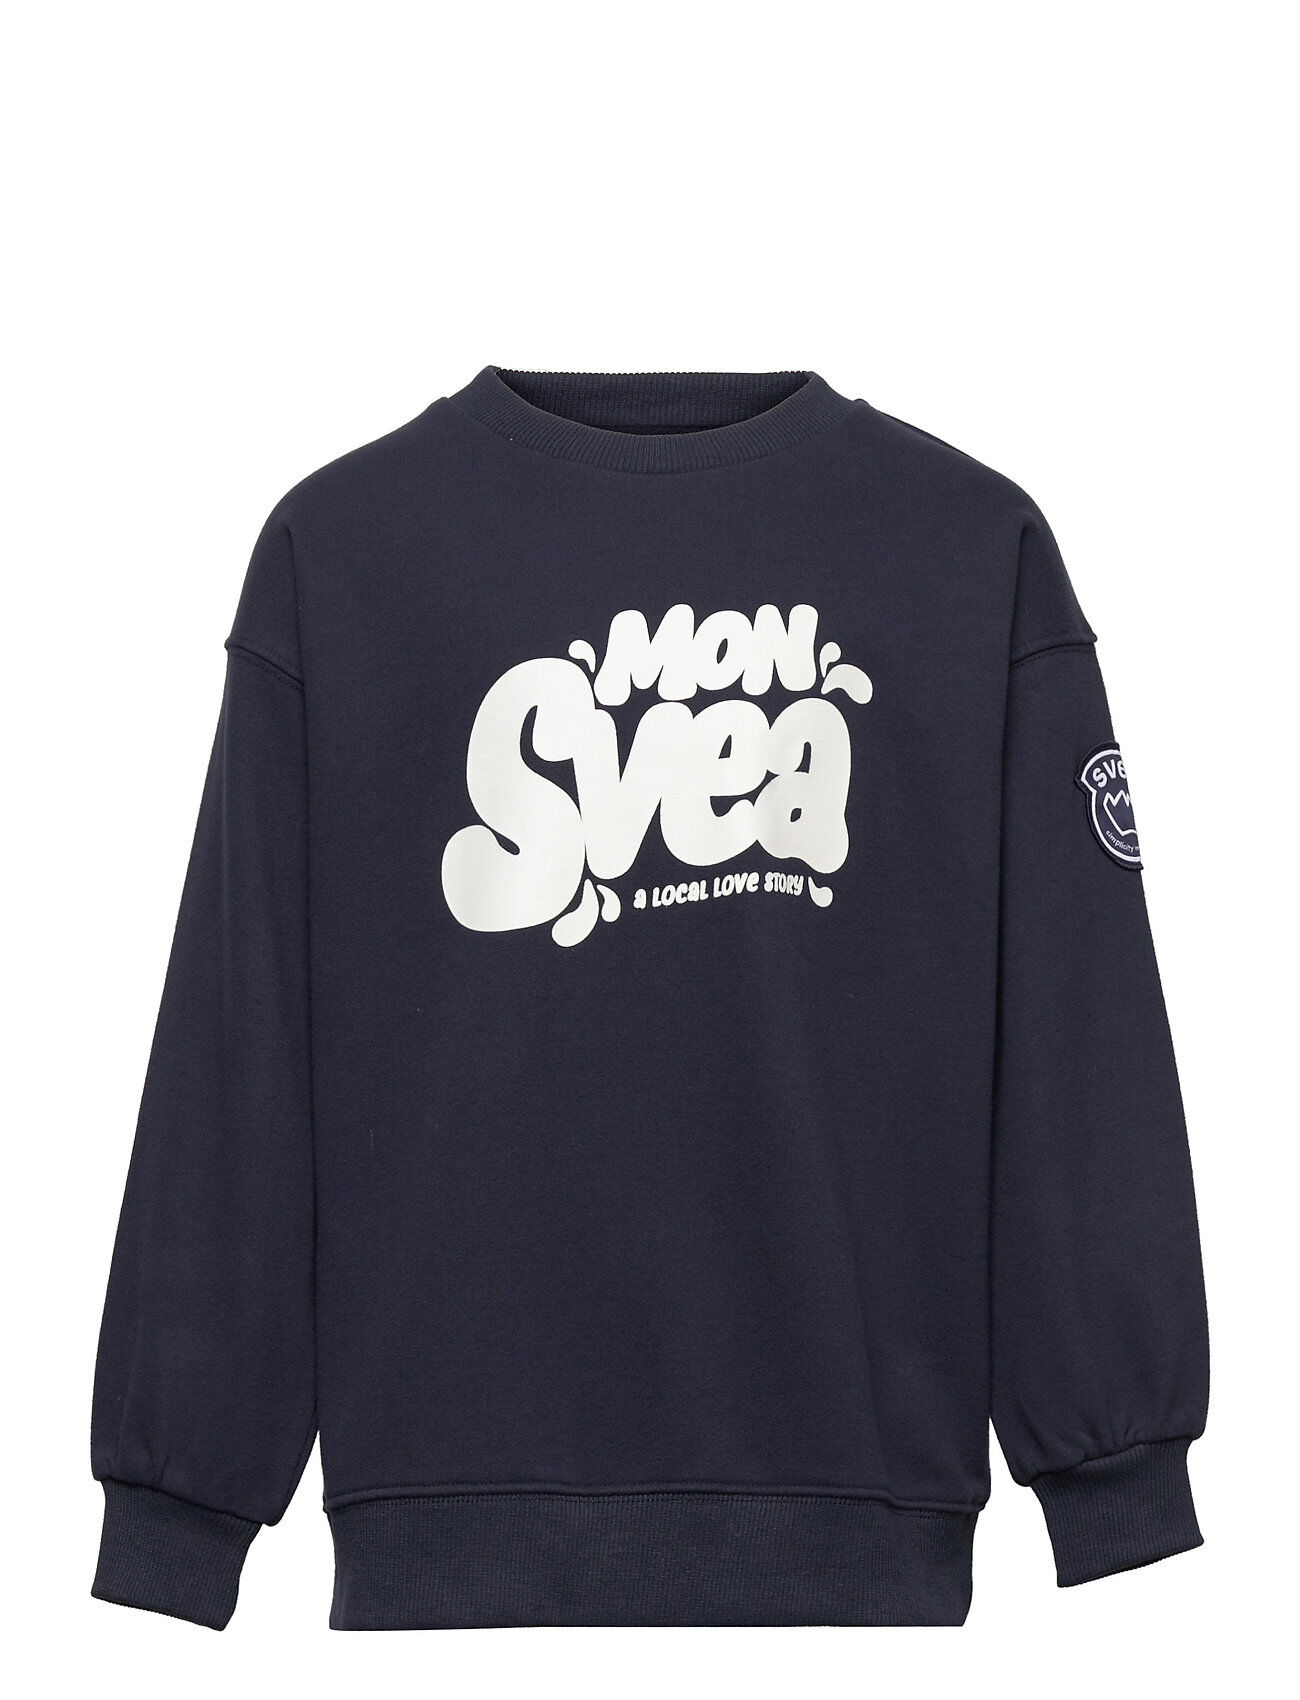 Svea K. Mon Svea Crew Sweat Sweat-shirt Genser Blå Svea